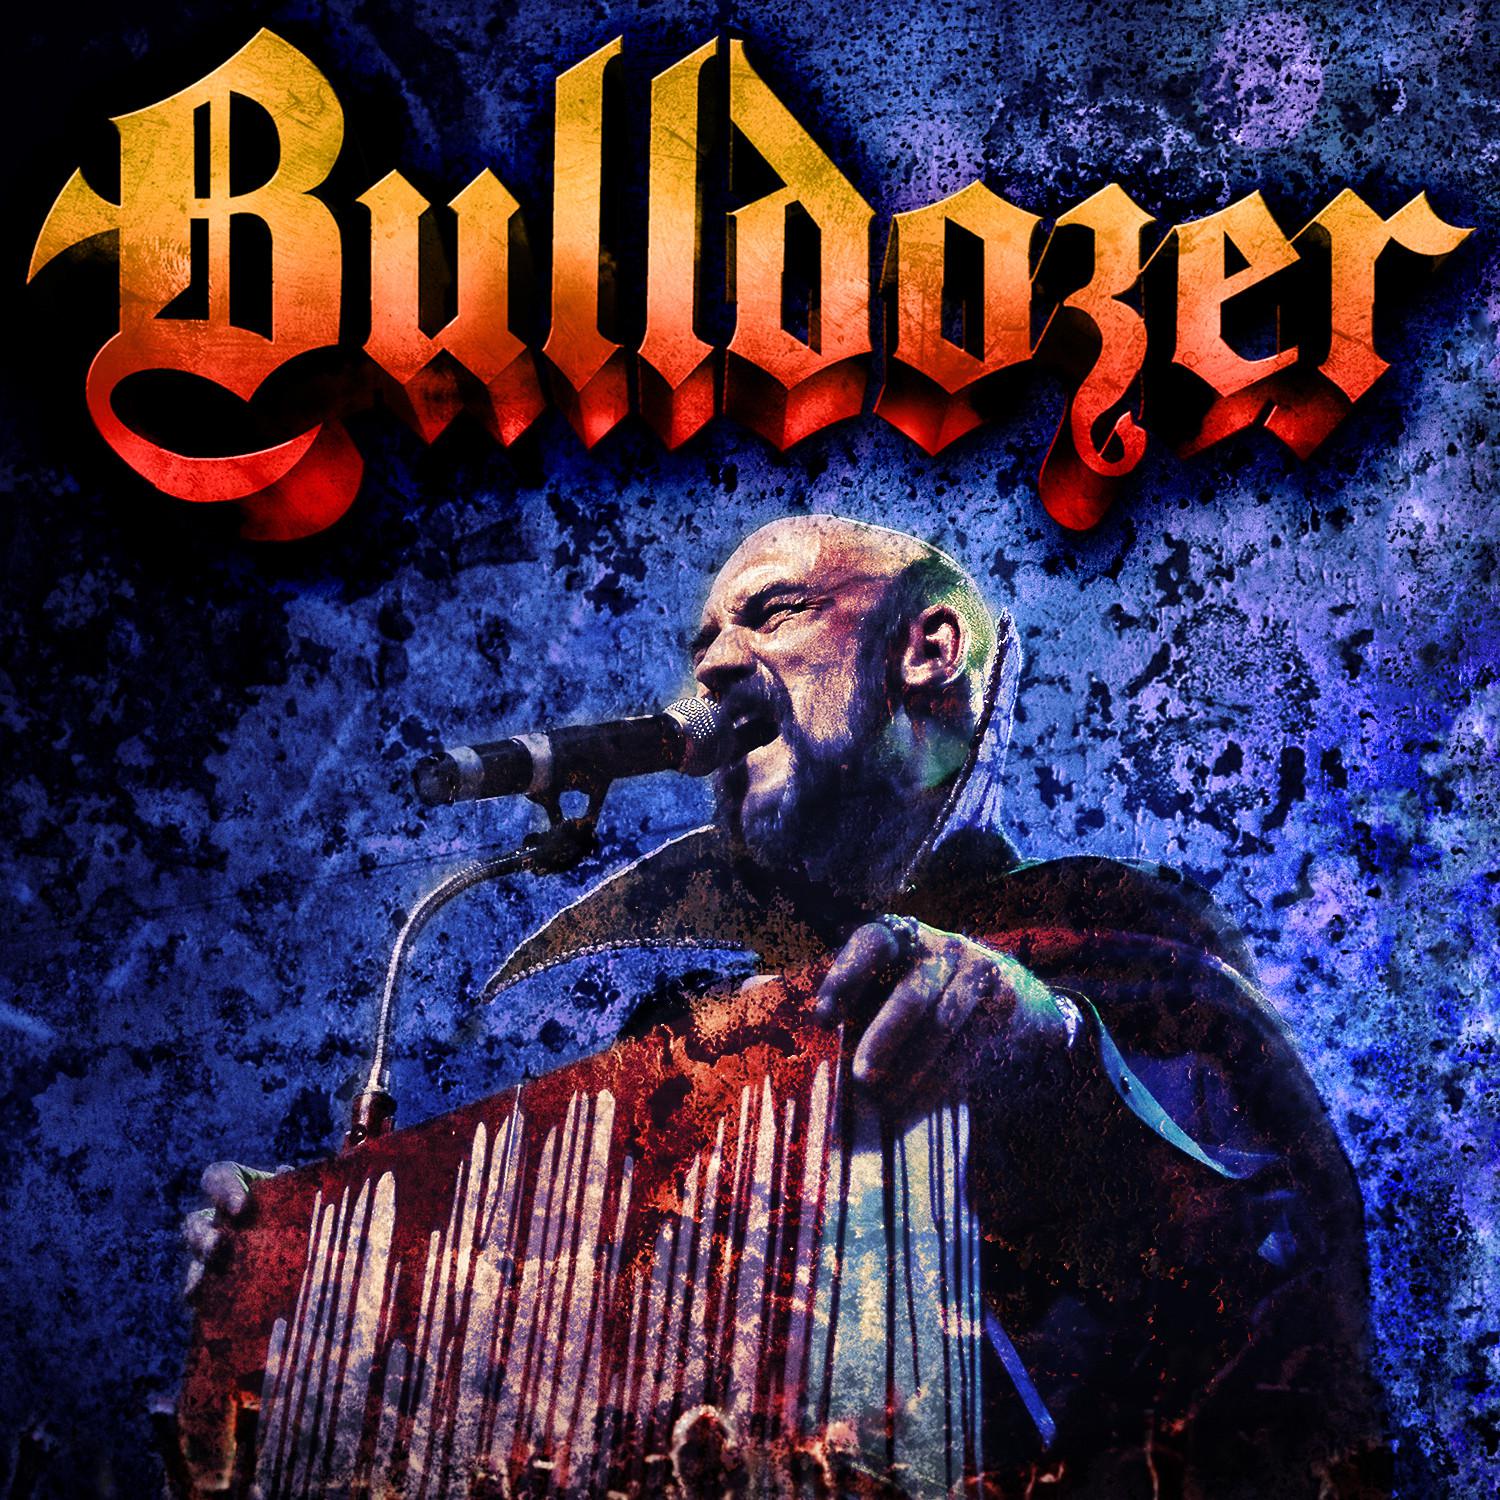 Bulldozer - Cut Throat (Live at Rock Hard Festival 2012)